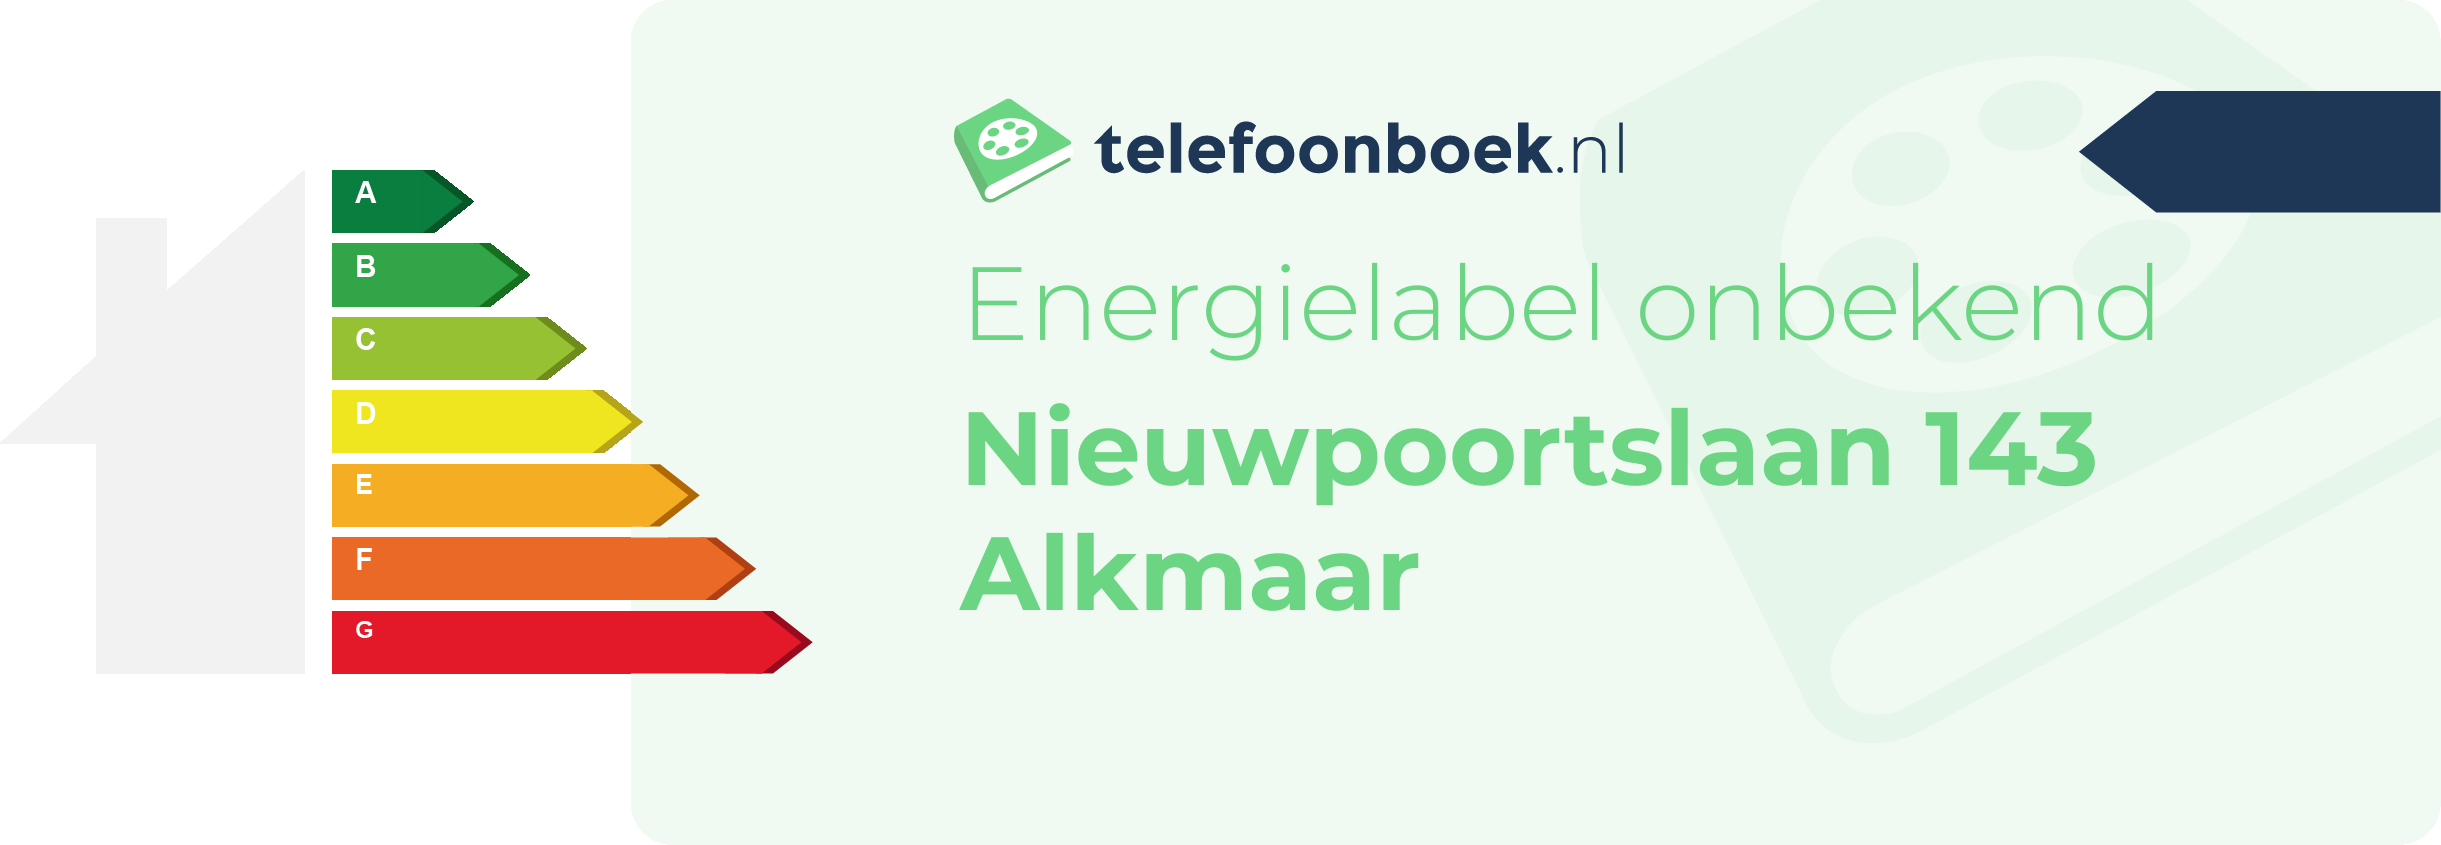 Energielabel Nieuwpoortslaan 143 Alkmaar